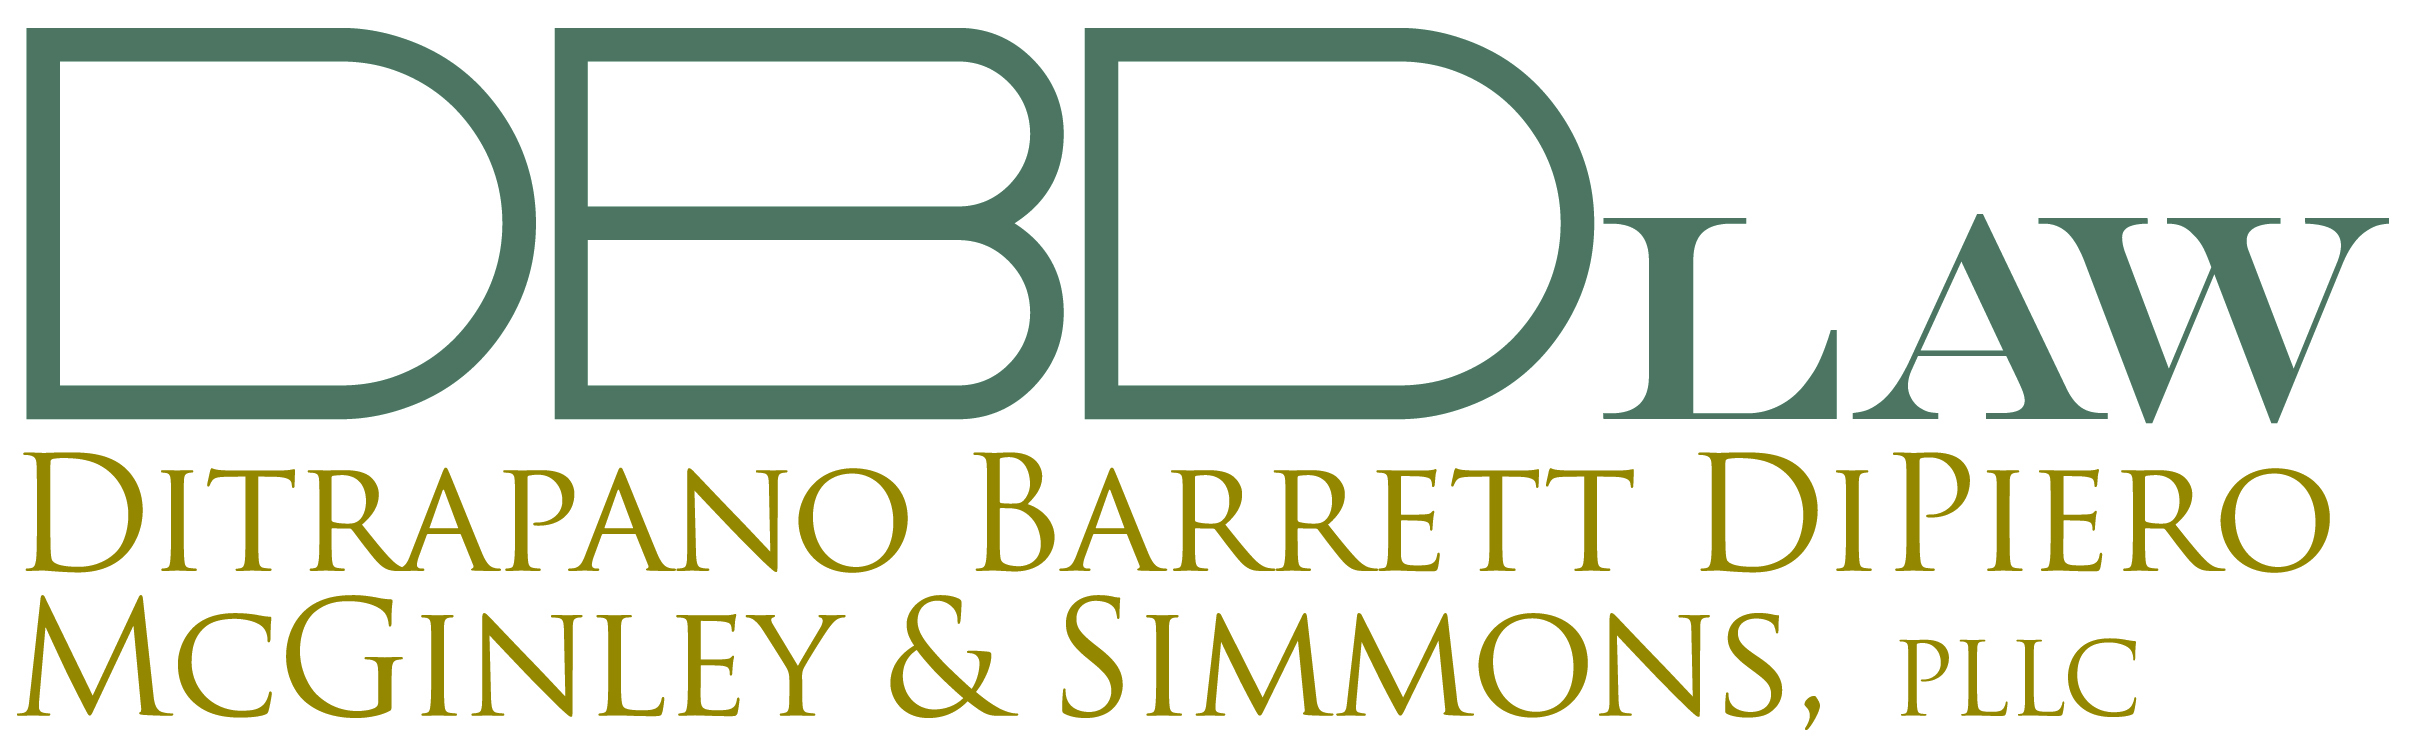 DBD logo color.jpg